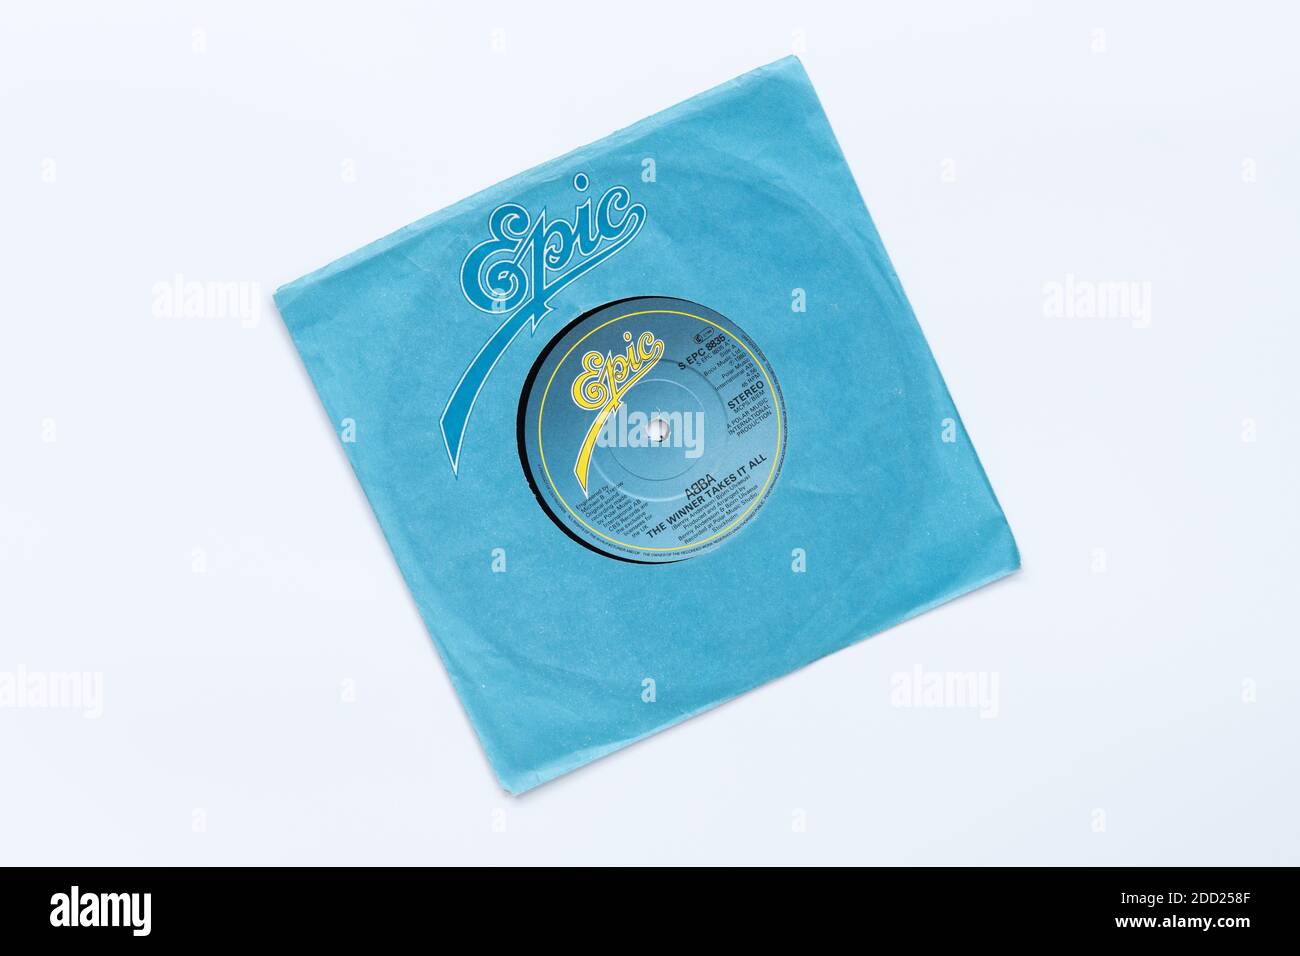 Epic Records 7' Vinyl Single - Abba - The Winner Takes IT All Stockfoto